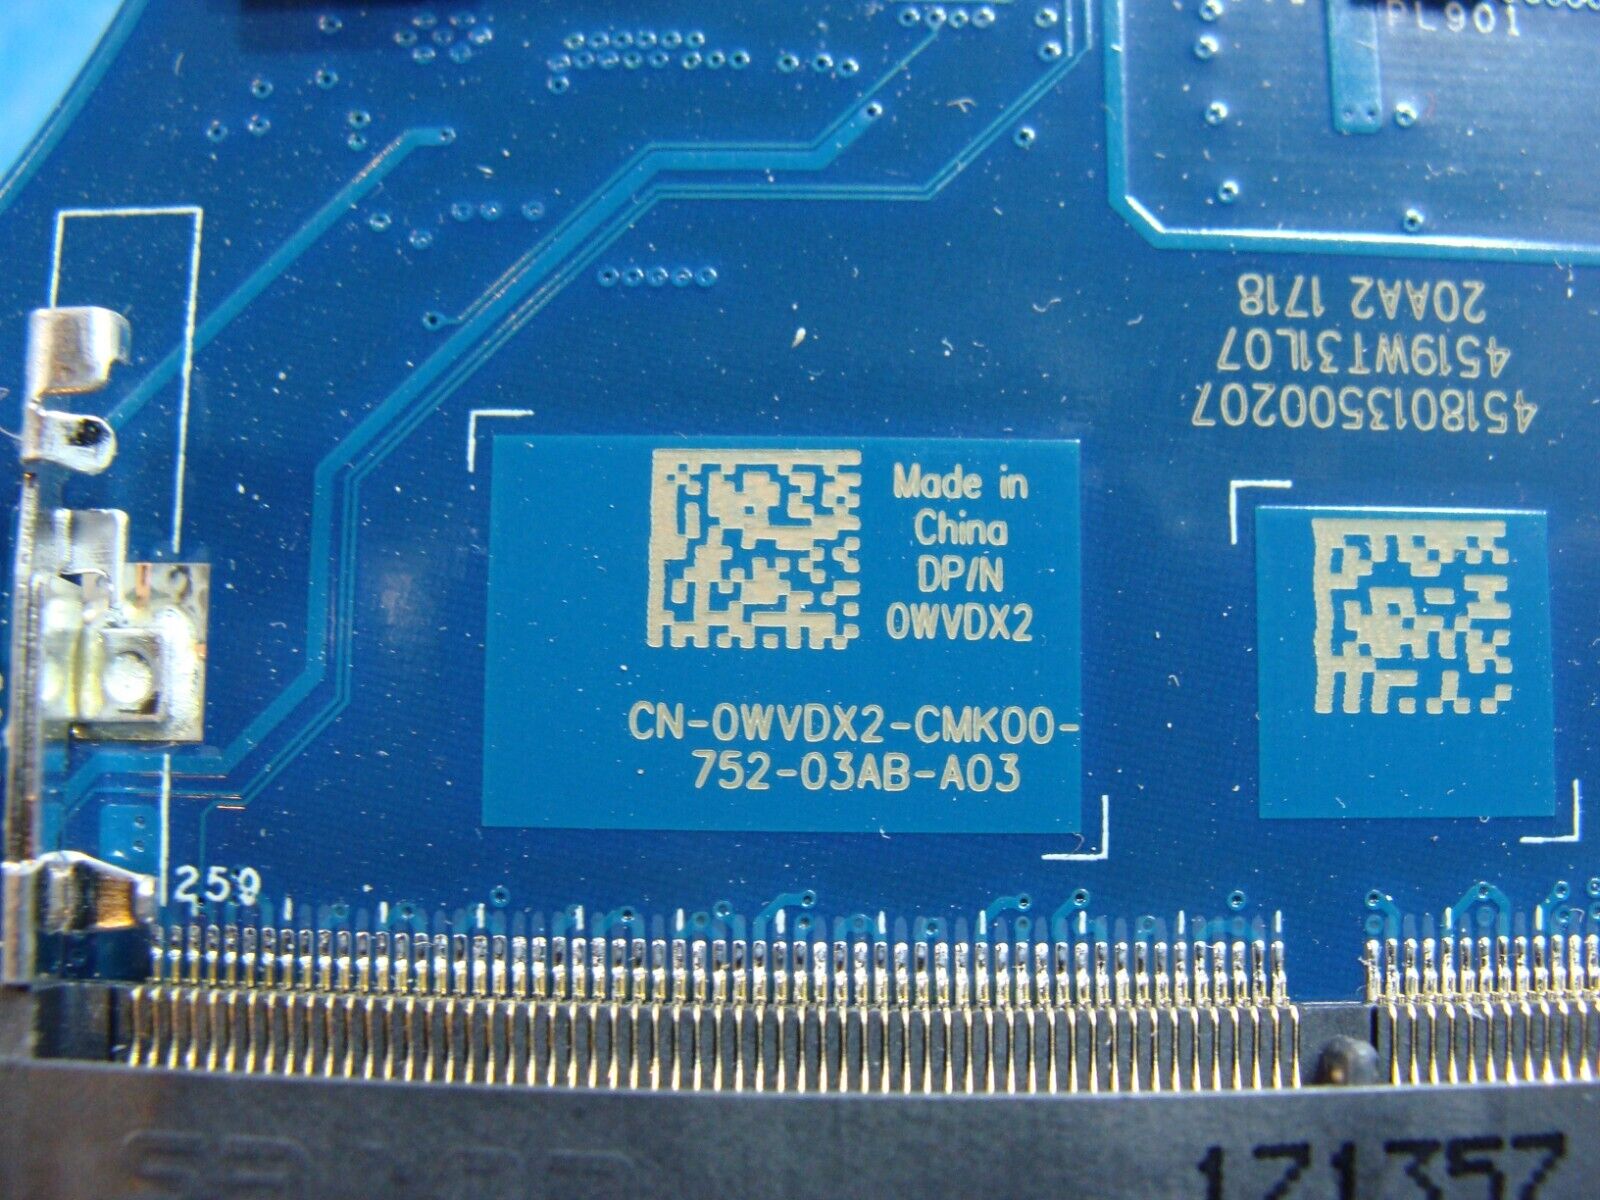 Dell Precision 5510 i7-6820HQ 2.7GHz Quadro M1000M 2GB Motherboard WVDX2 AS IS